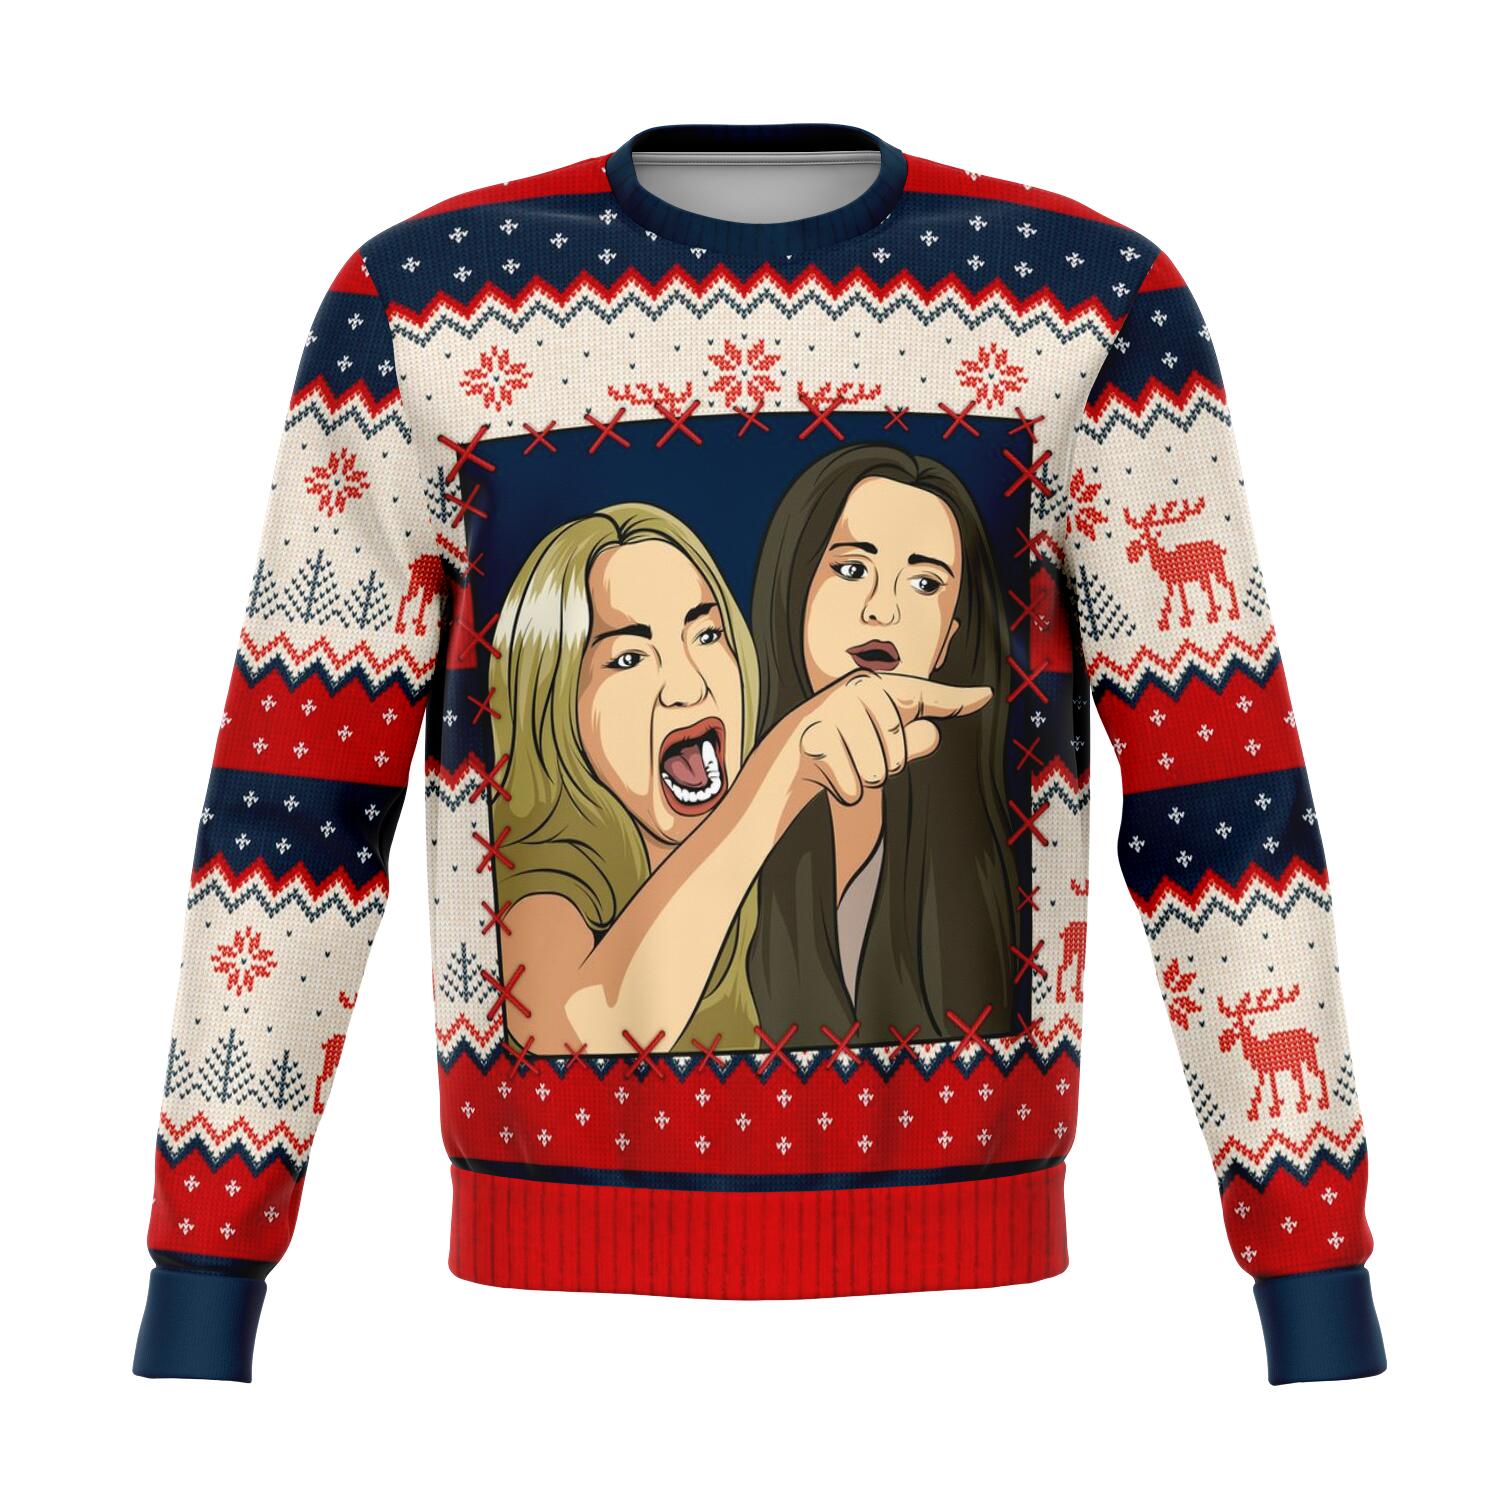 Woman Yelling At A Cat Meme #1 Christmas Crewneck Sweatshirt